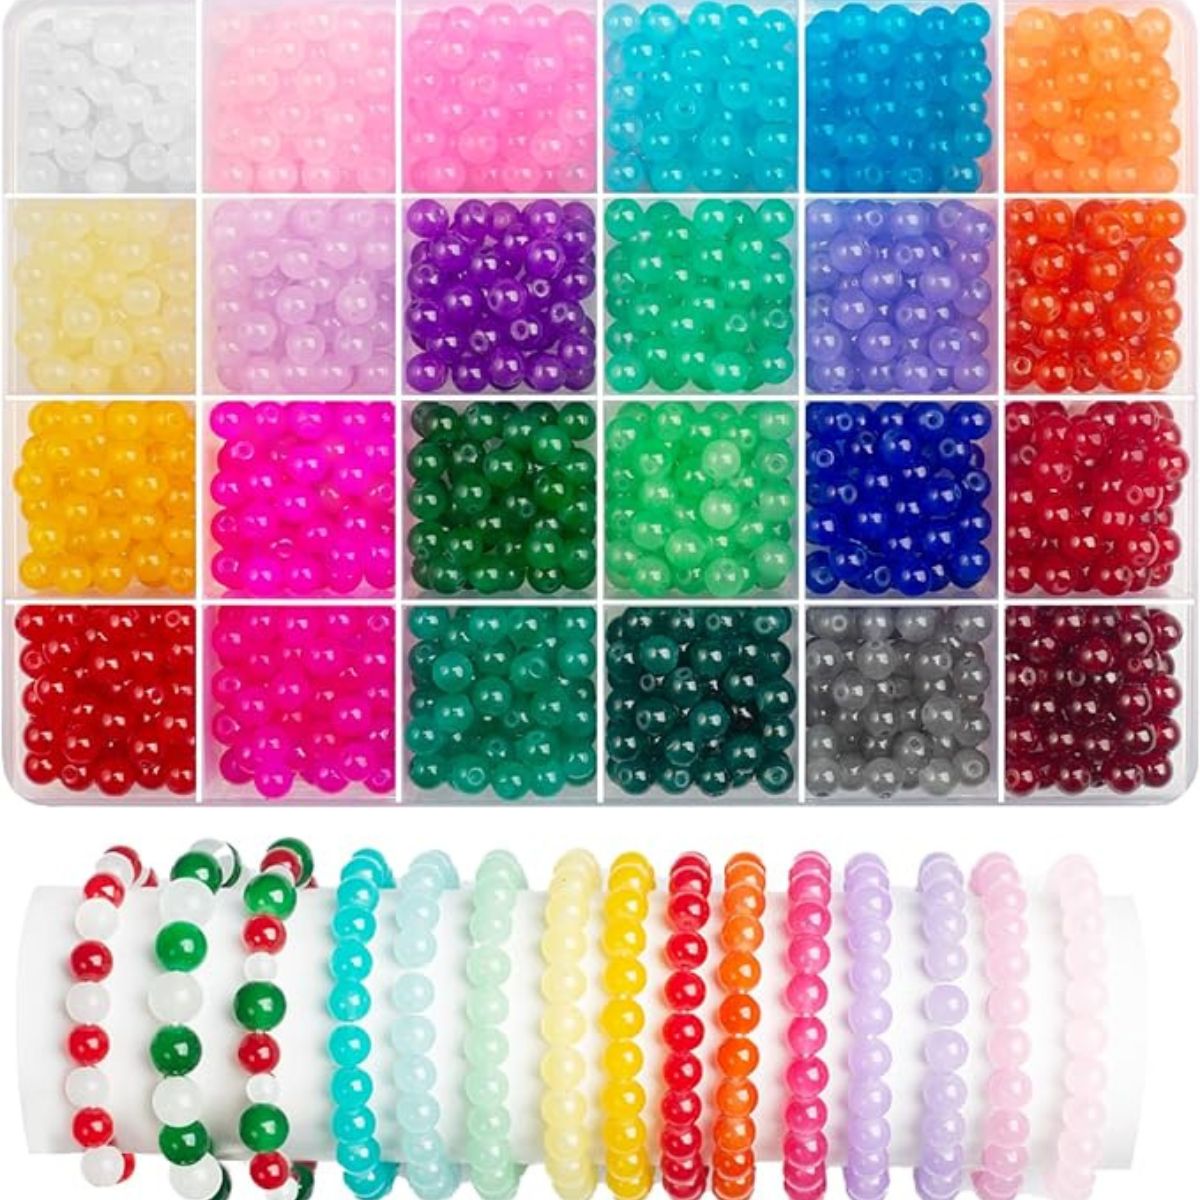 6 mm High-Quality Glass Beads Bracelet Making Kit 1200 pcs